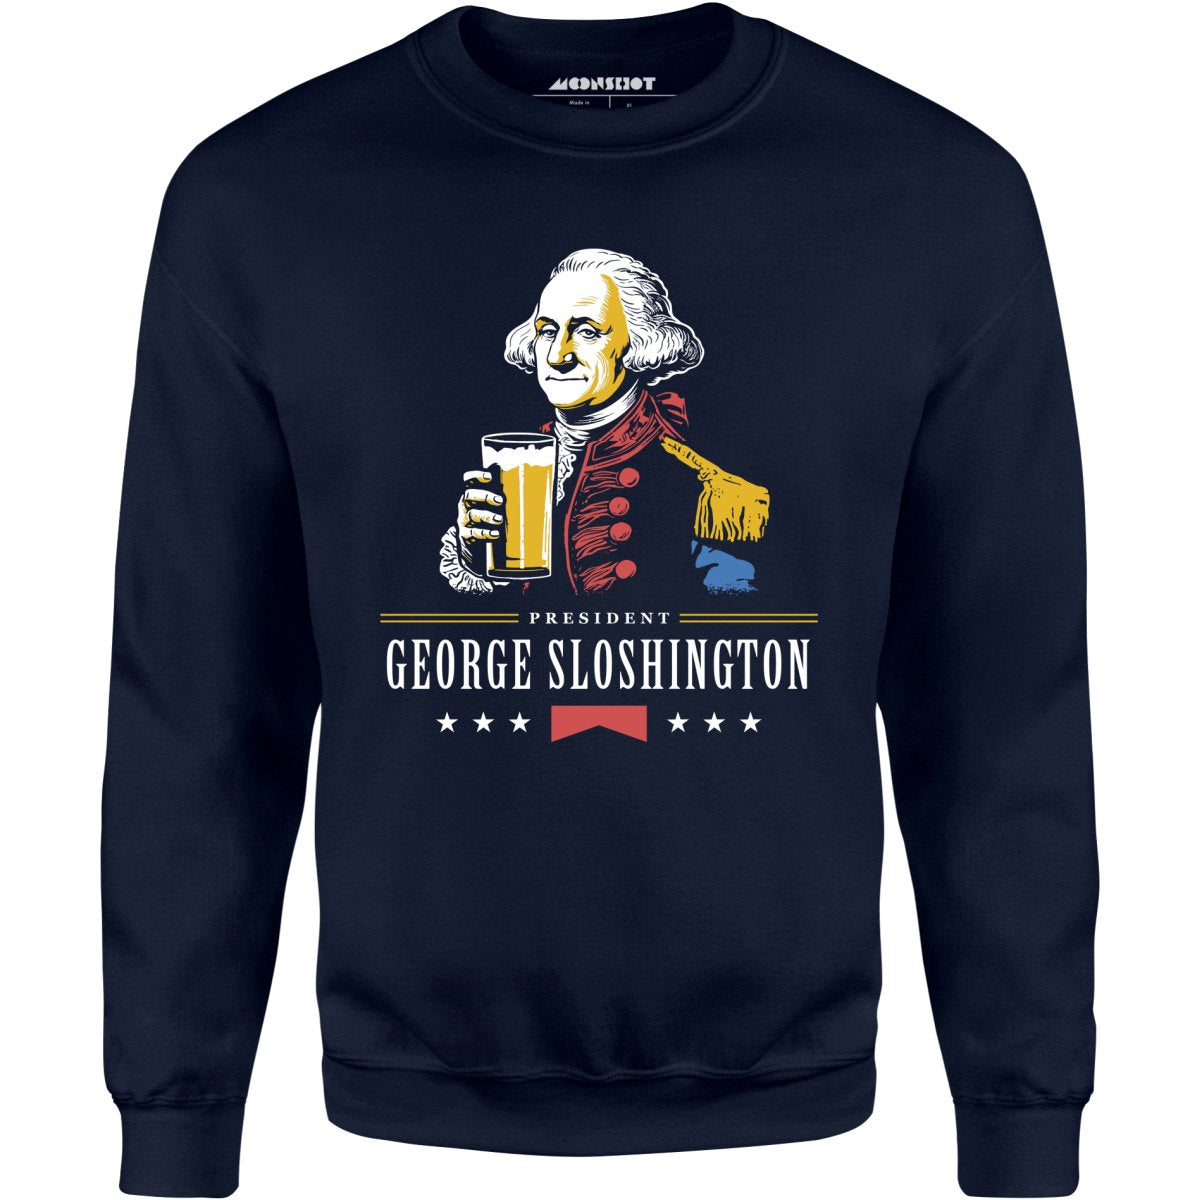 President George Sloshington - Unisex Sweatshirt